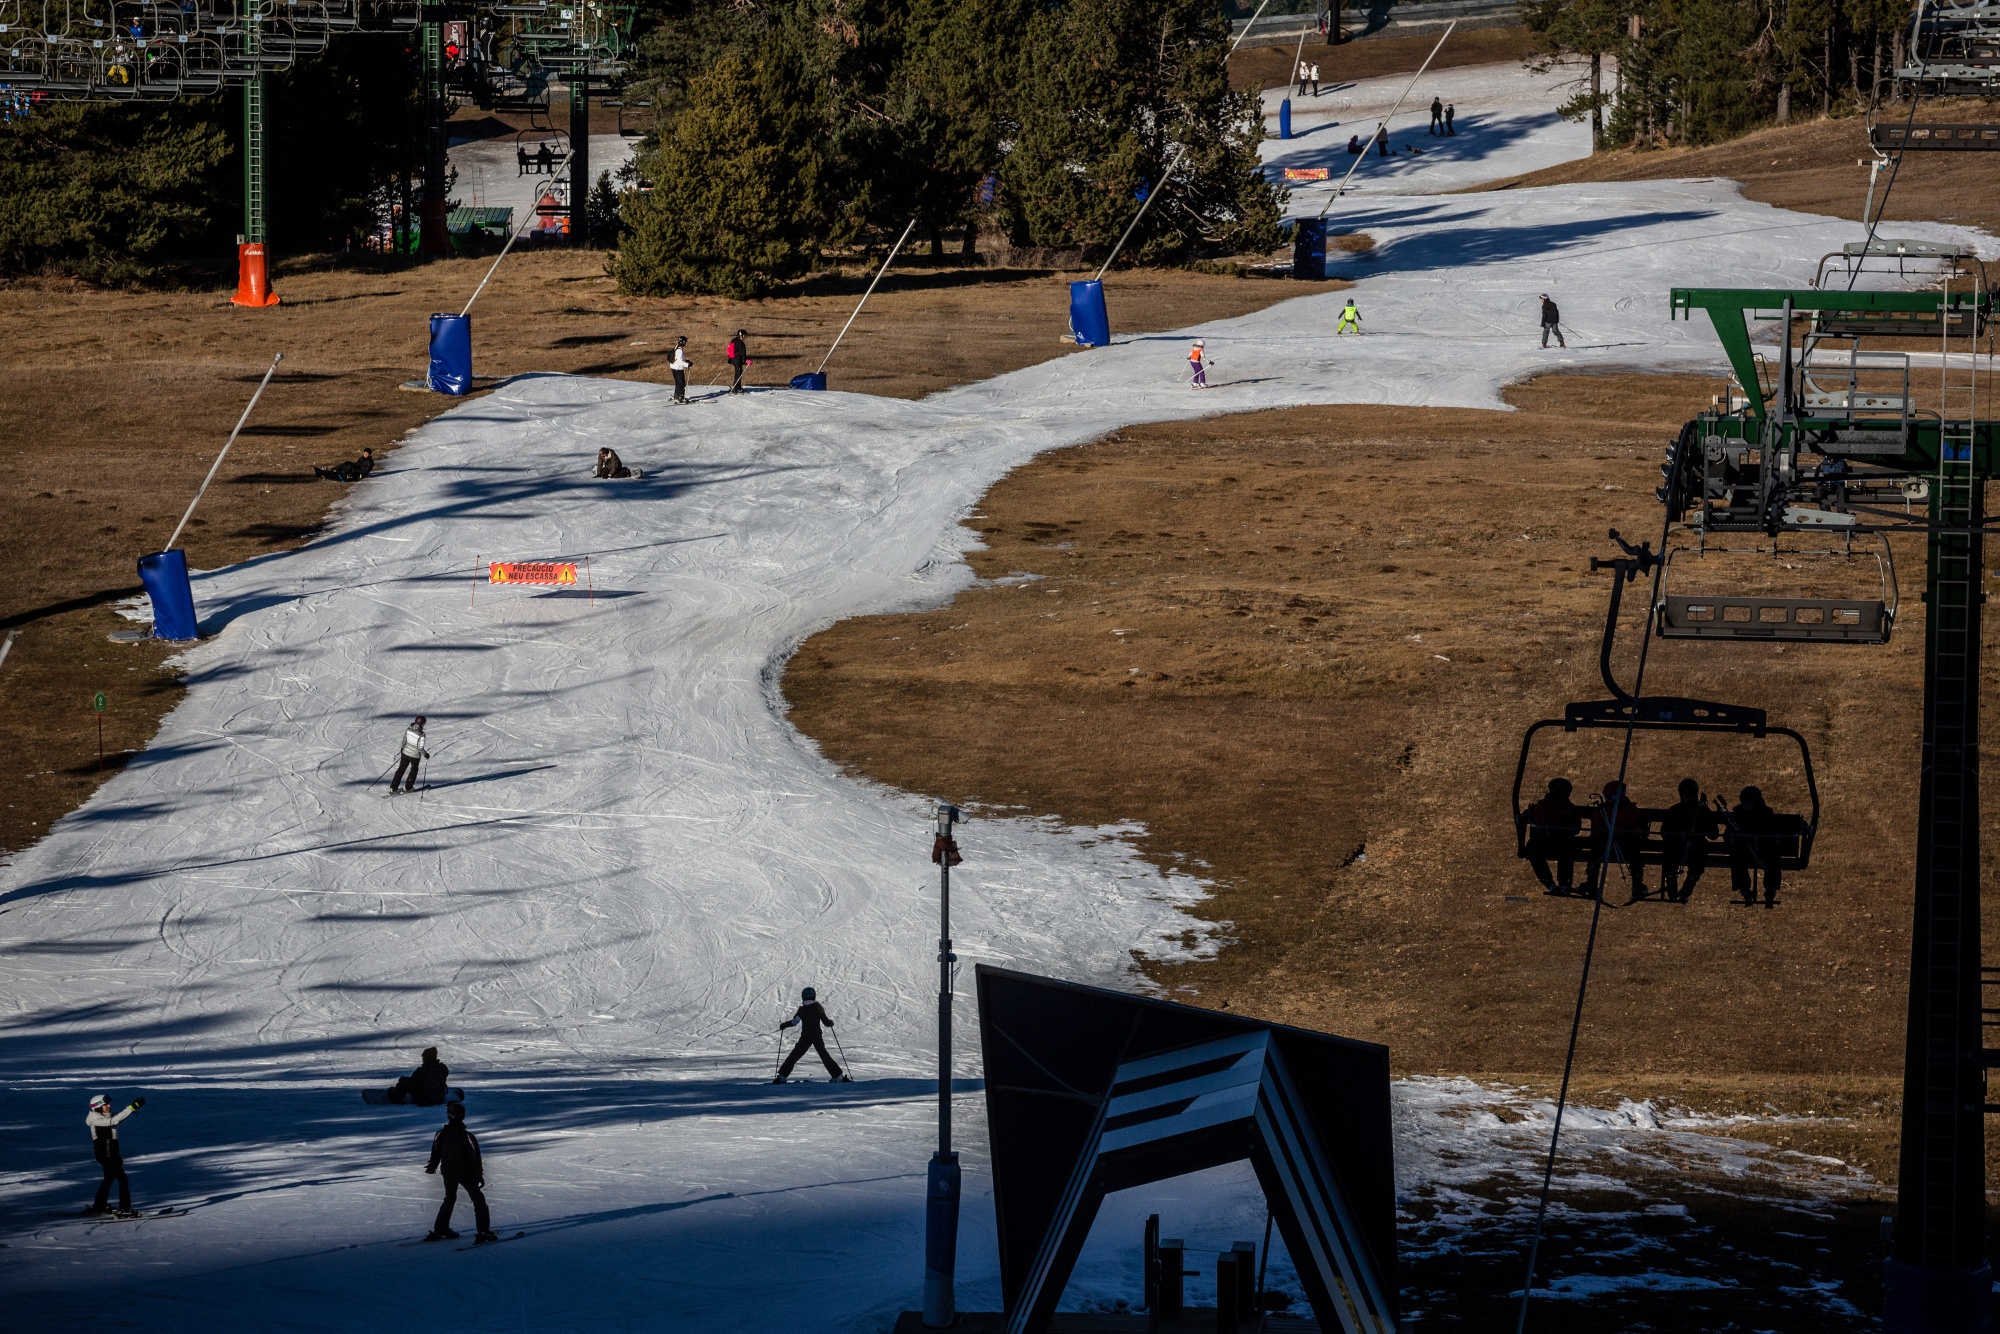 Northeast ski resorts turn to leaner, meaner snowmaking guns